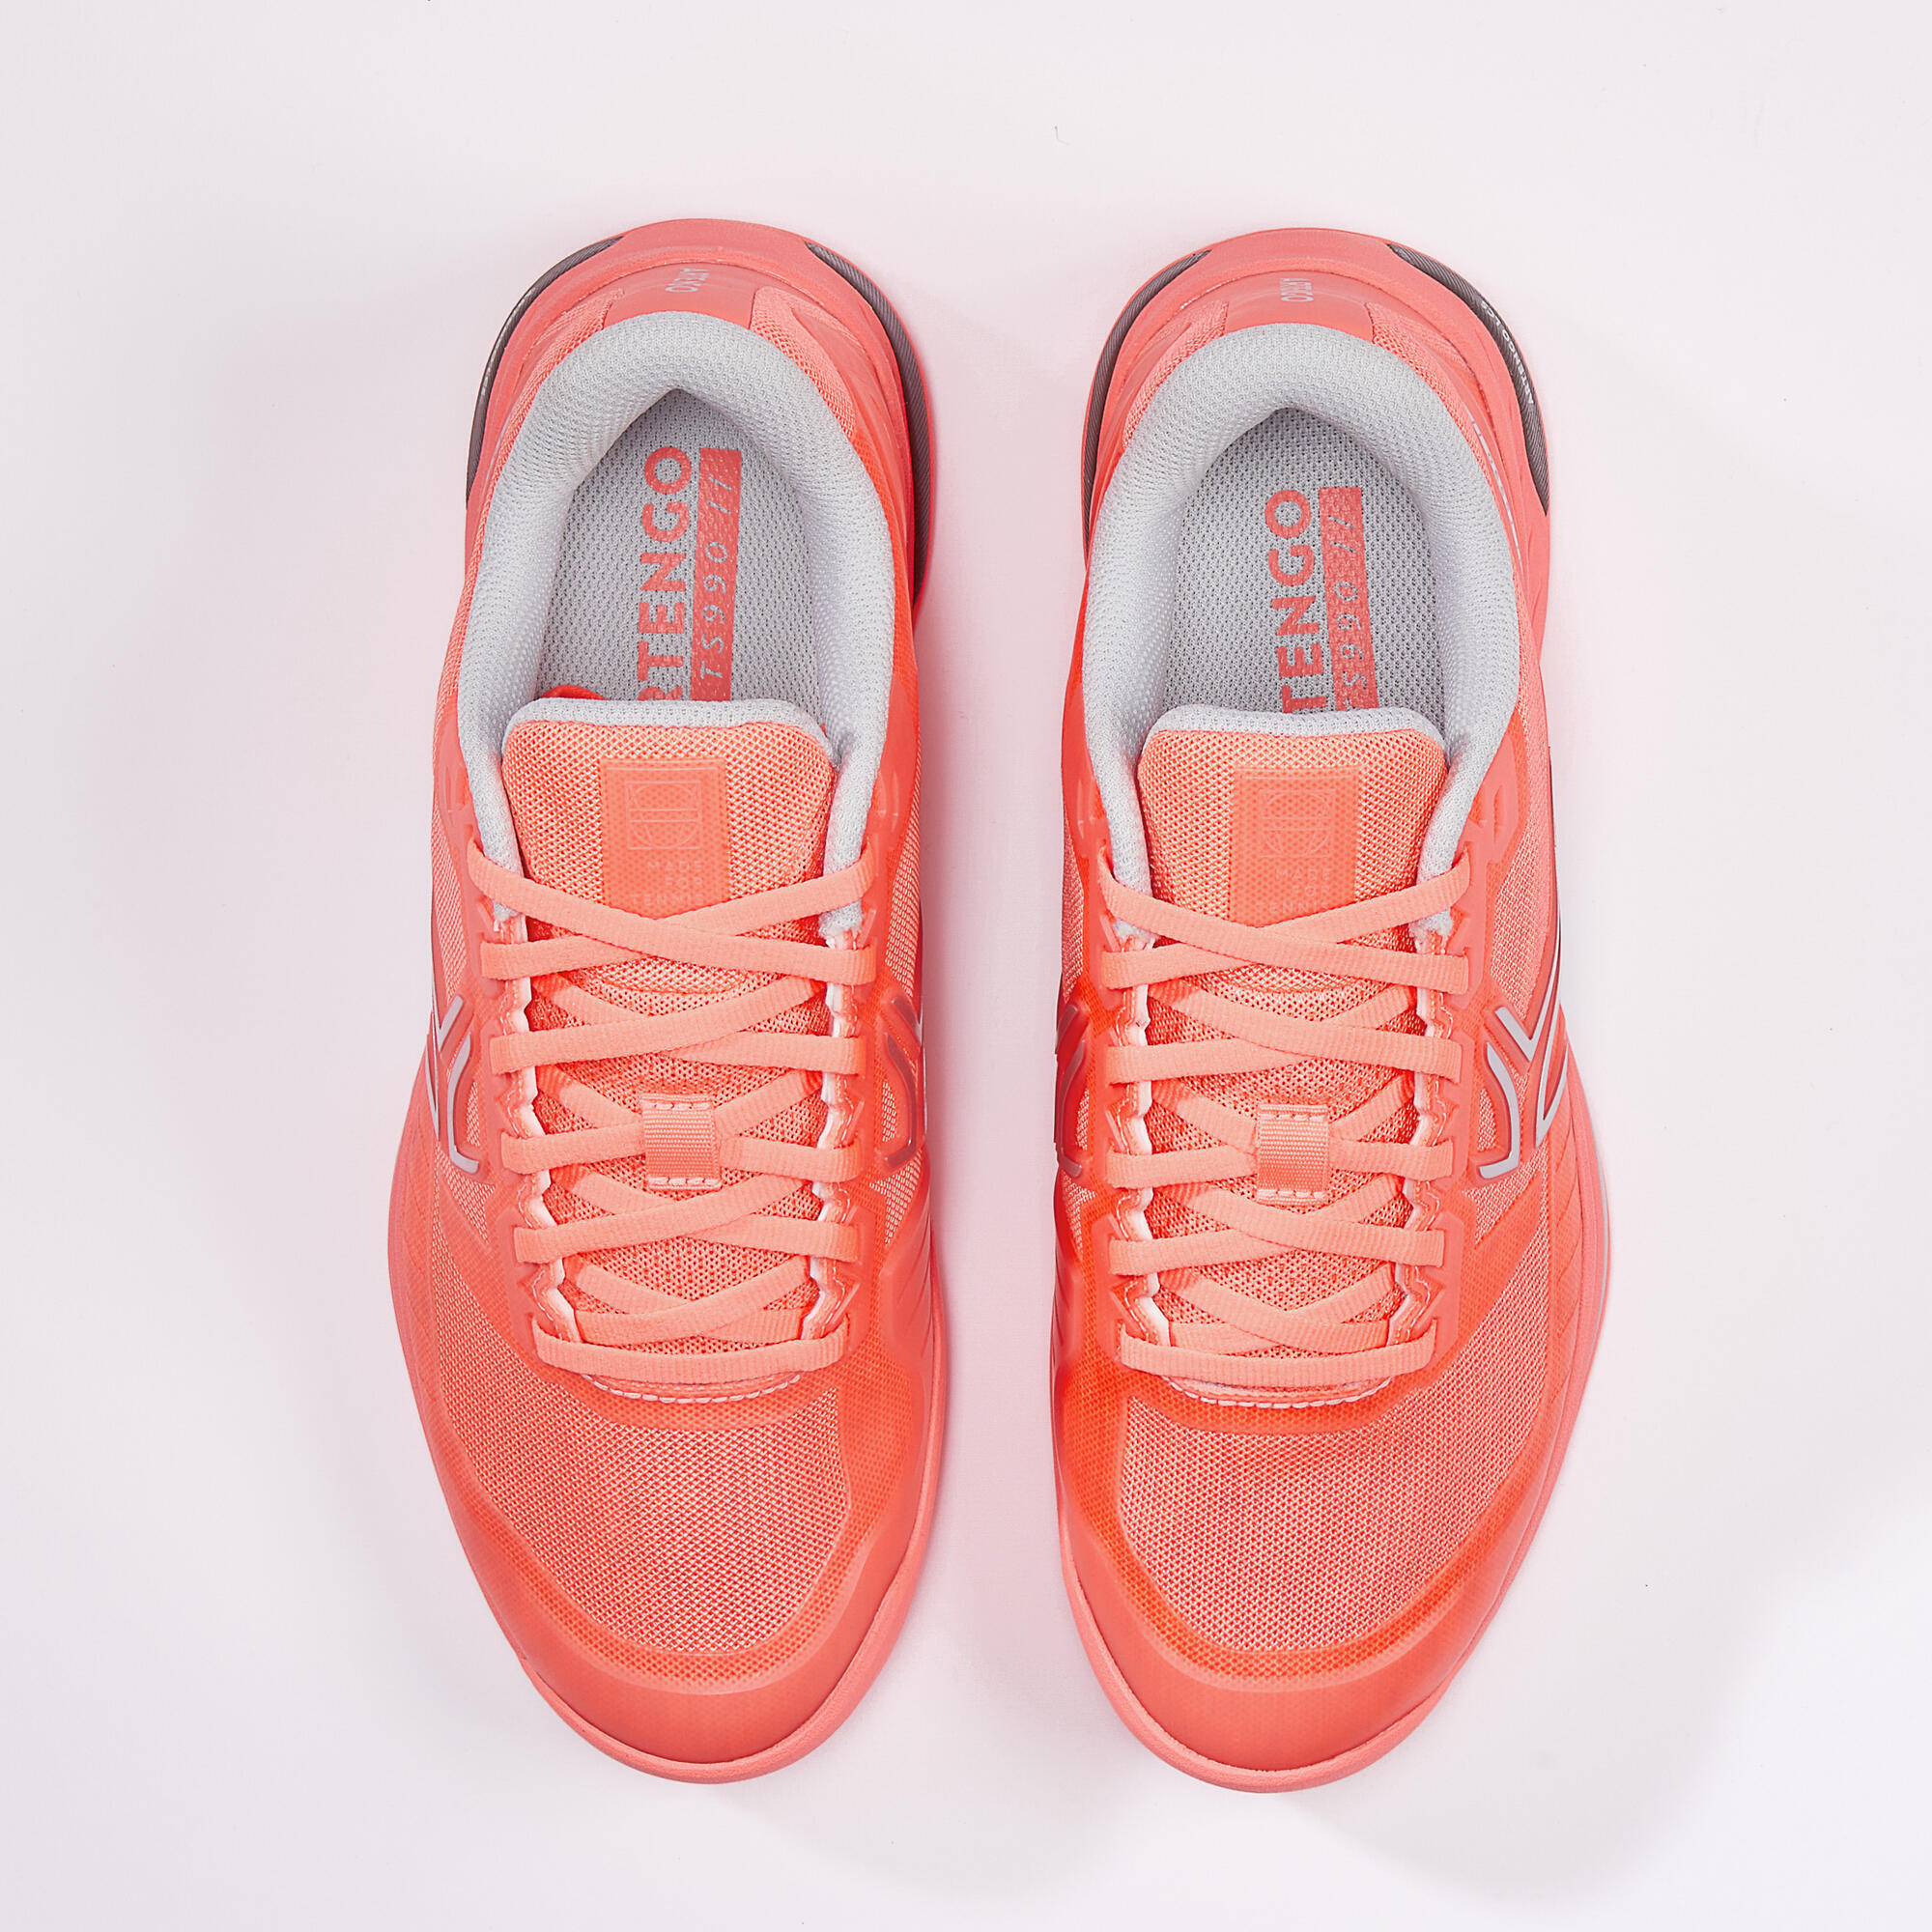 Women's Tennis Shoes TS990 - Coral 3/8